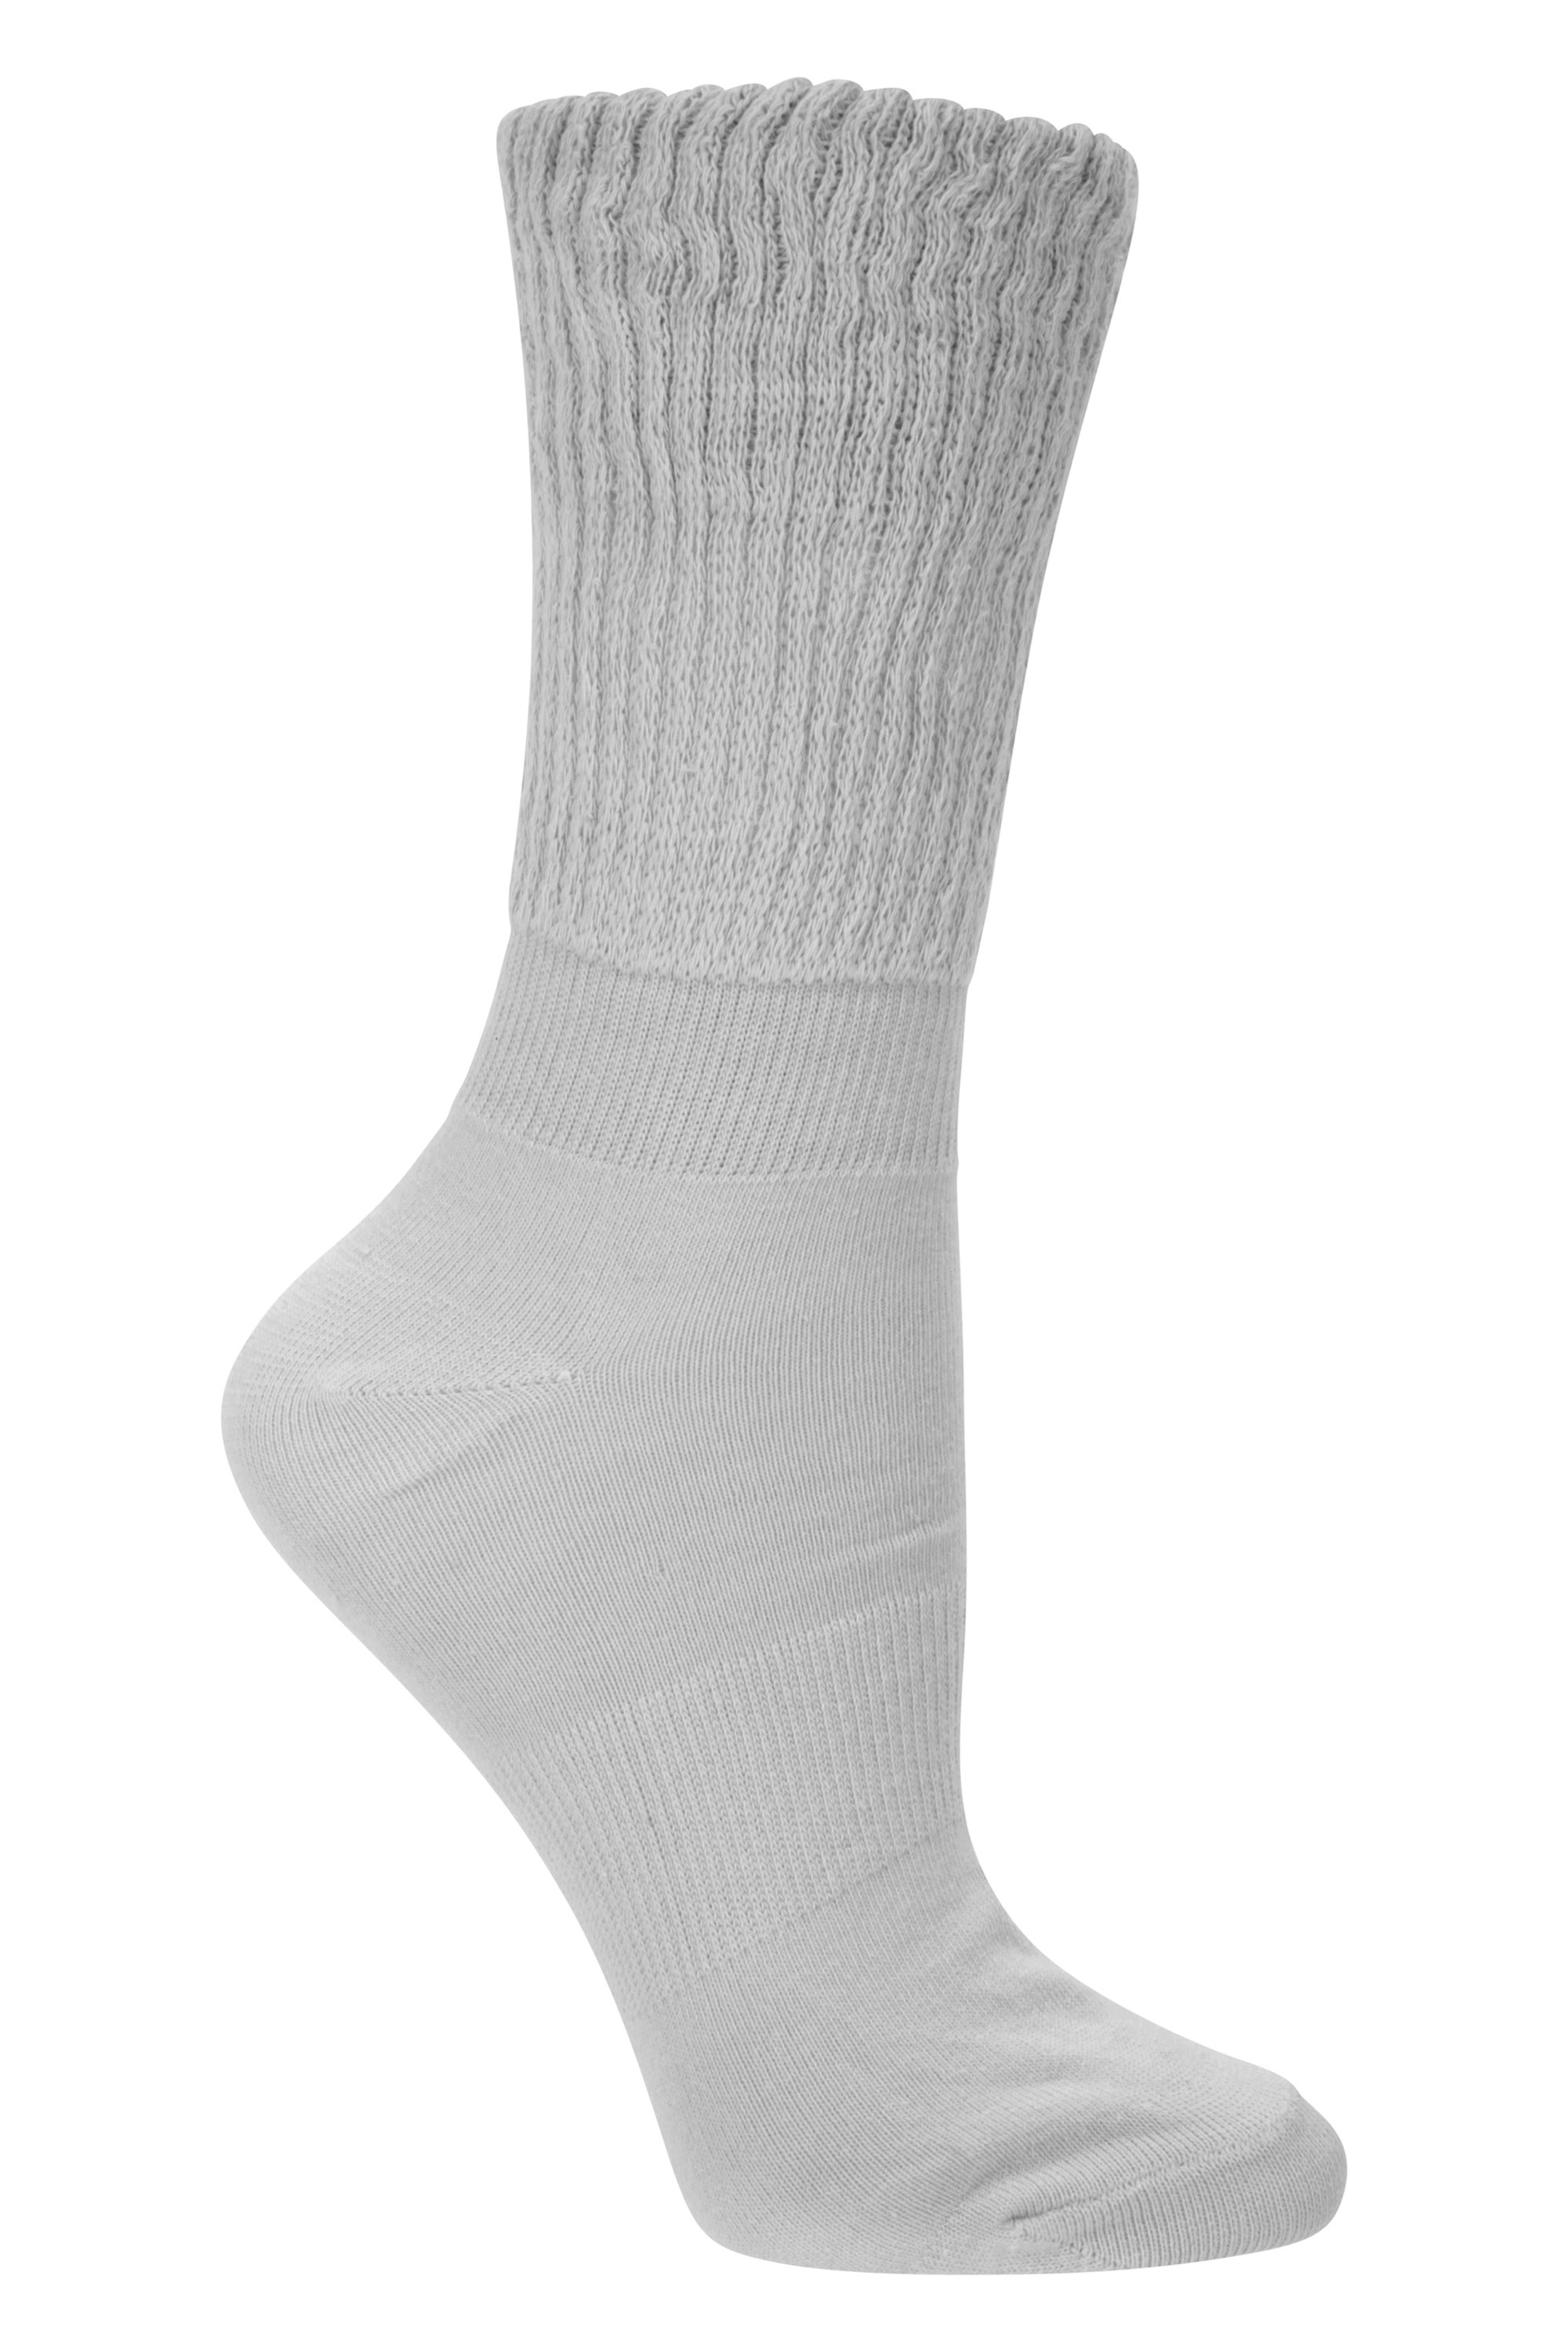 Extra Grip Lightweight Breathable Summer Socks Mountain Warehouse Ultra Comfort Walking Socks Padded Toe & Heel to Prevent Blisters & Irritation High Wick Fabric 